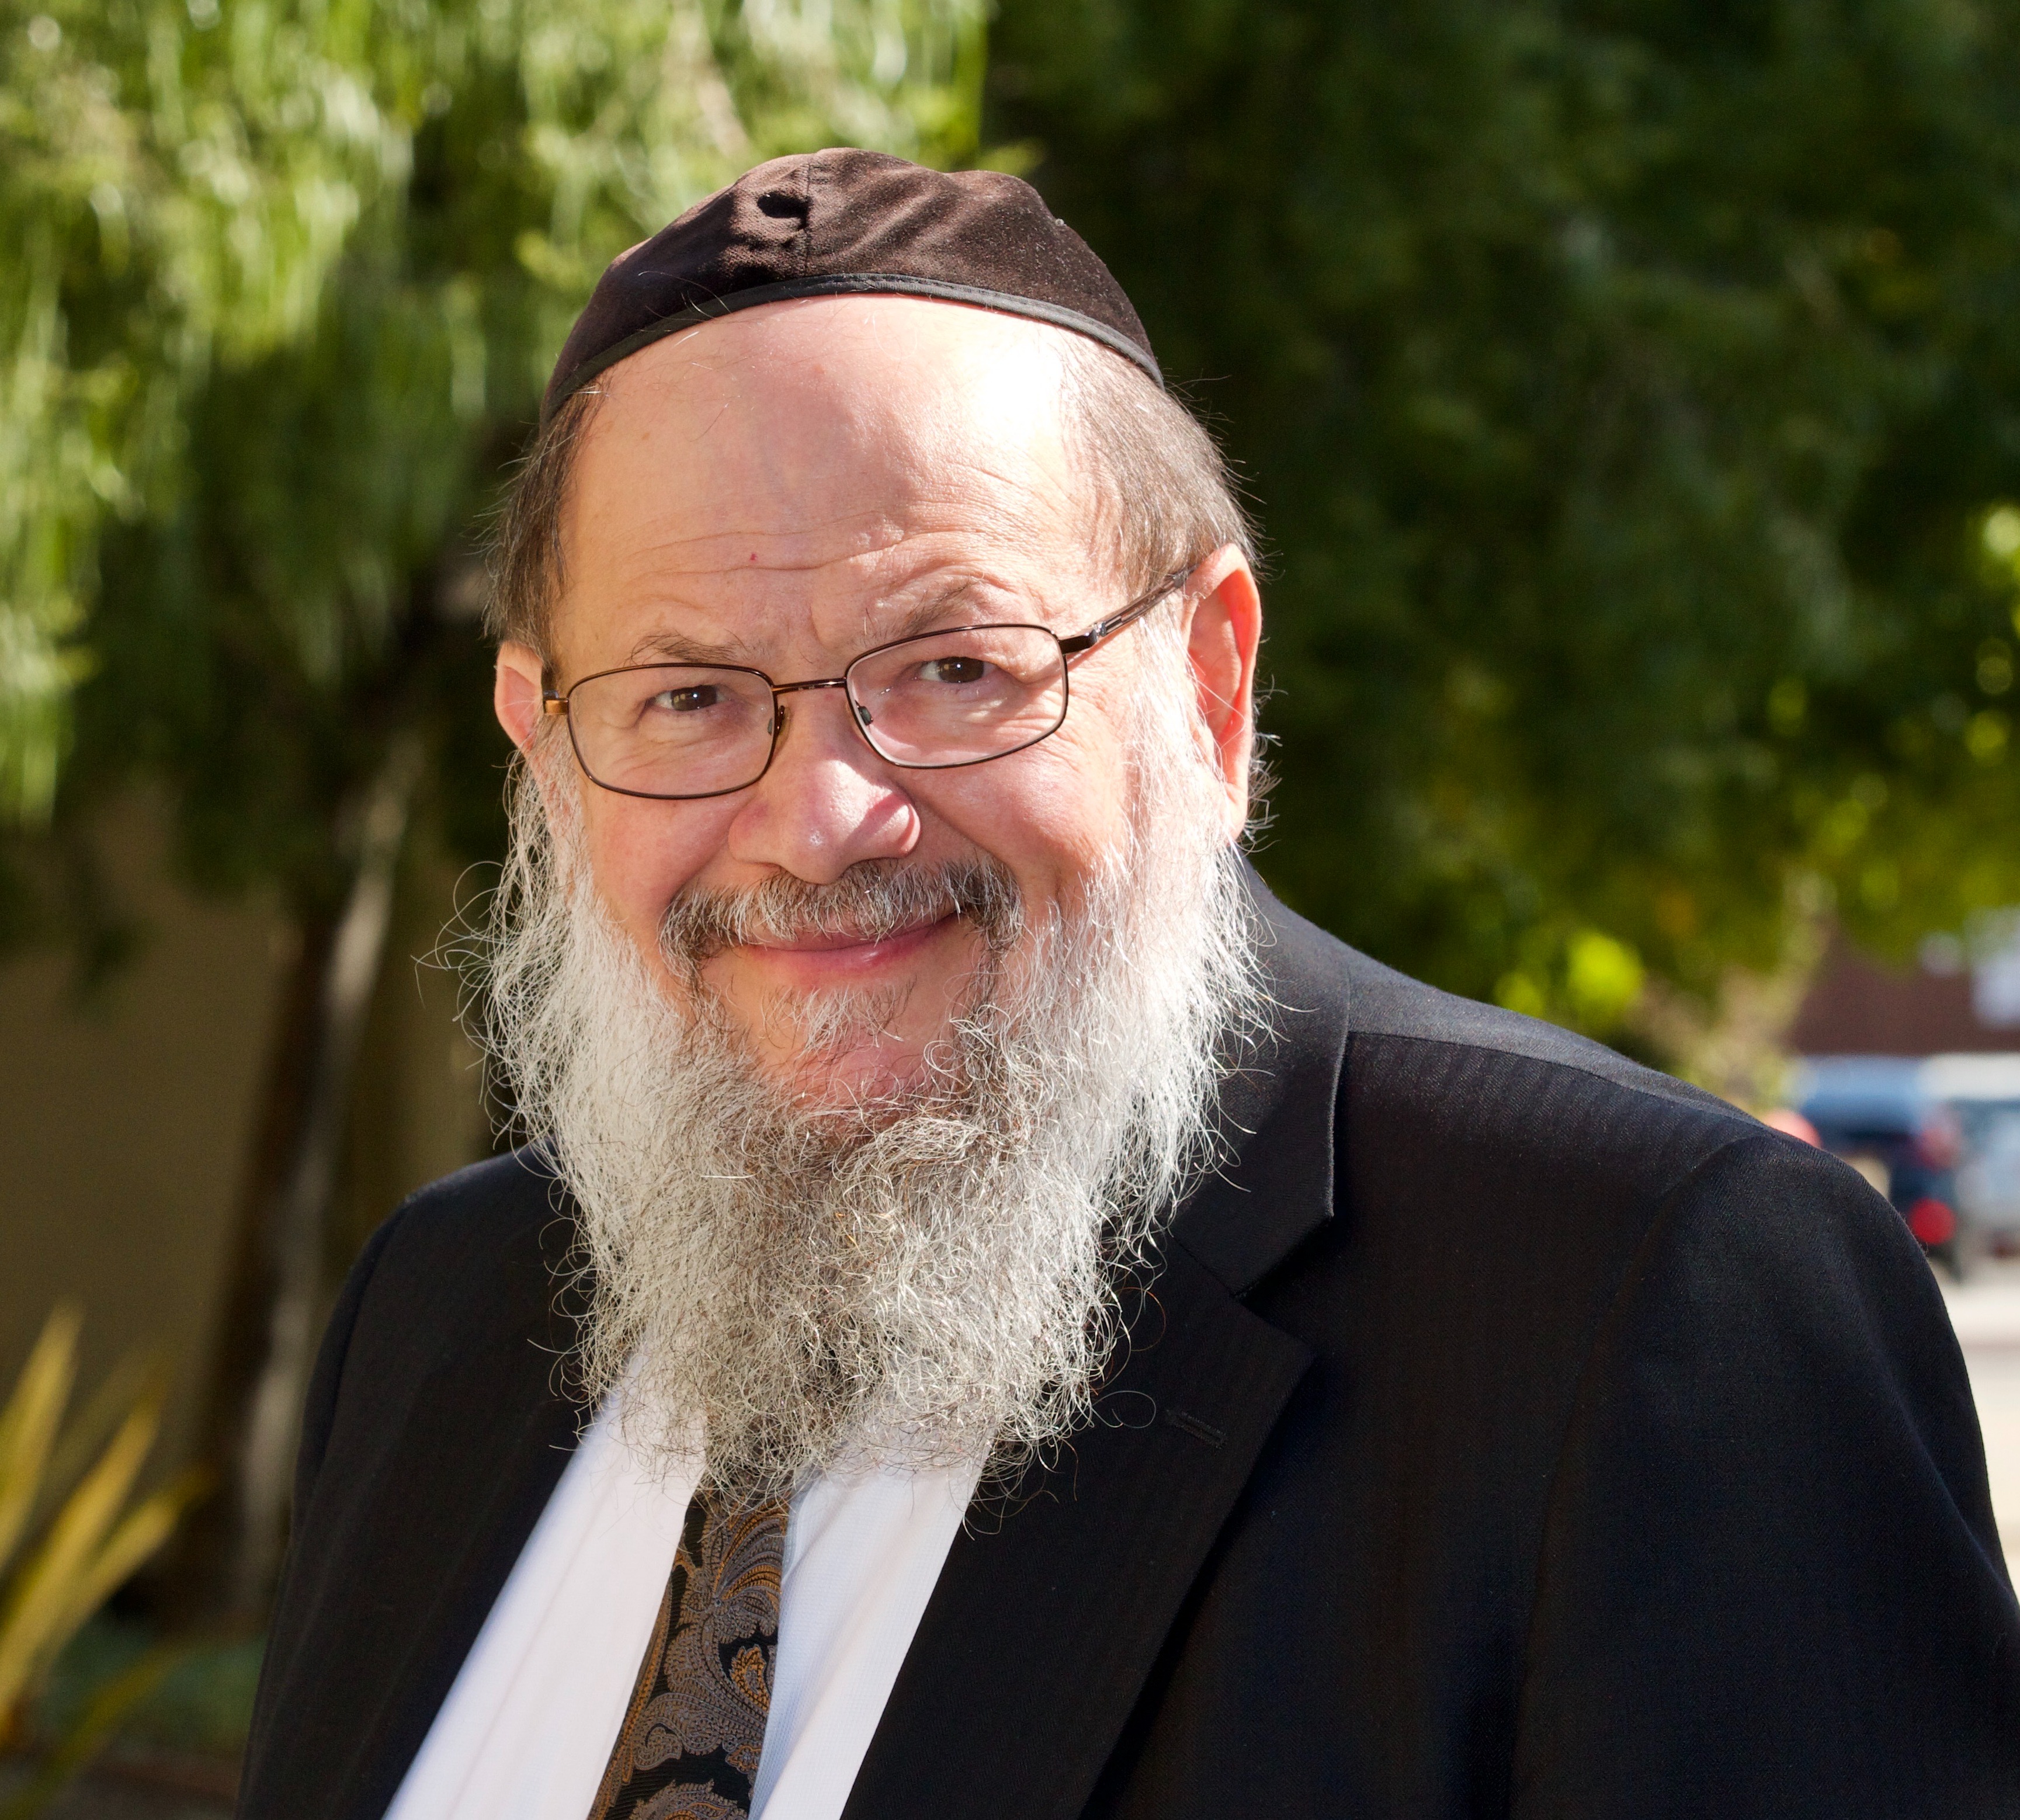 Rabbi Stulberger of Valley Torah